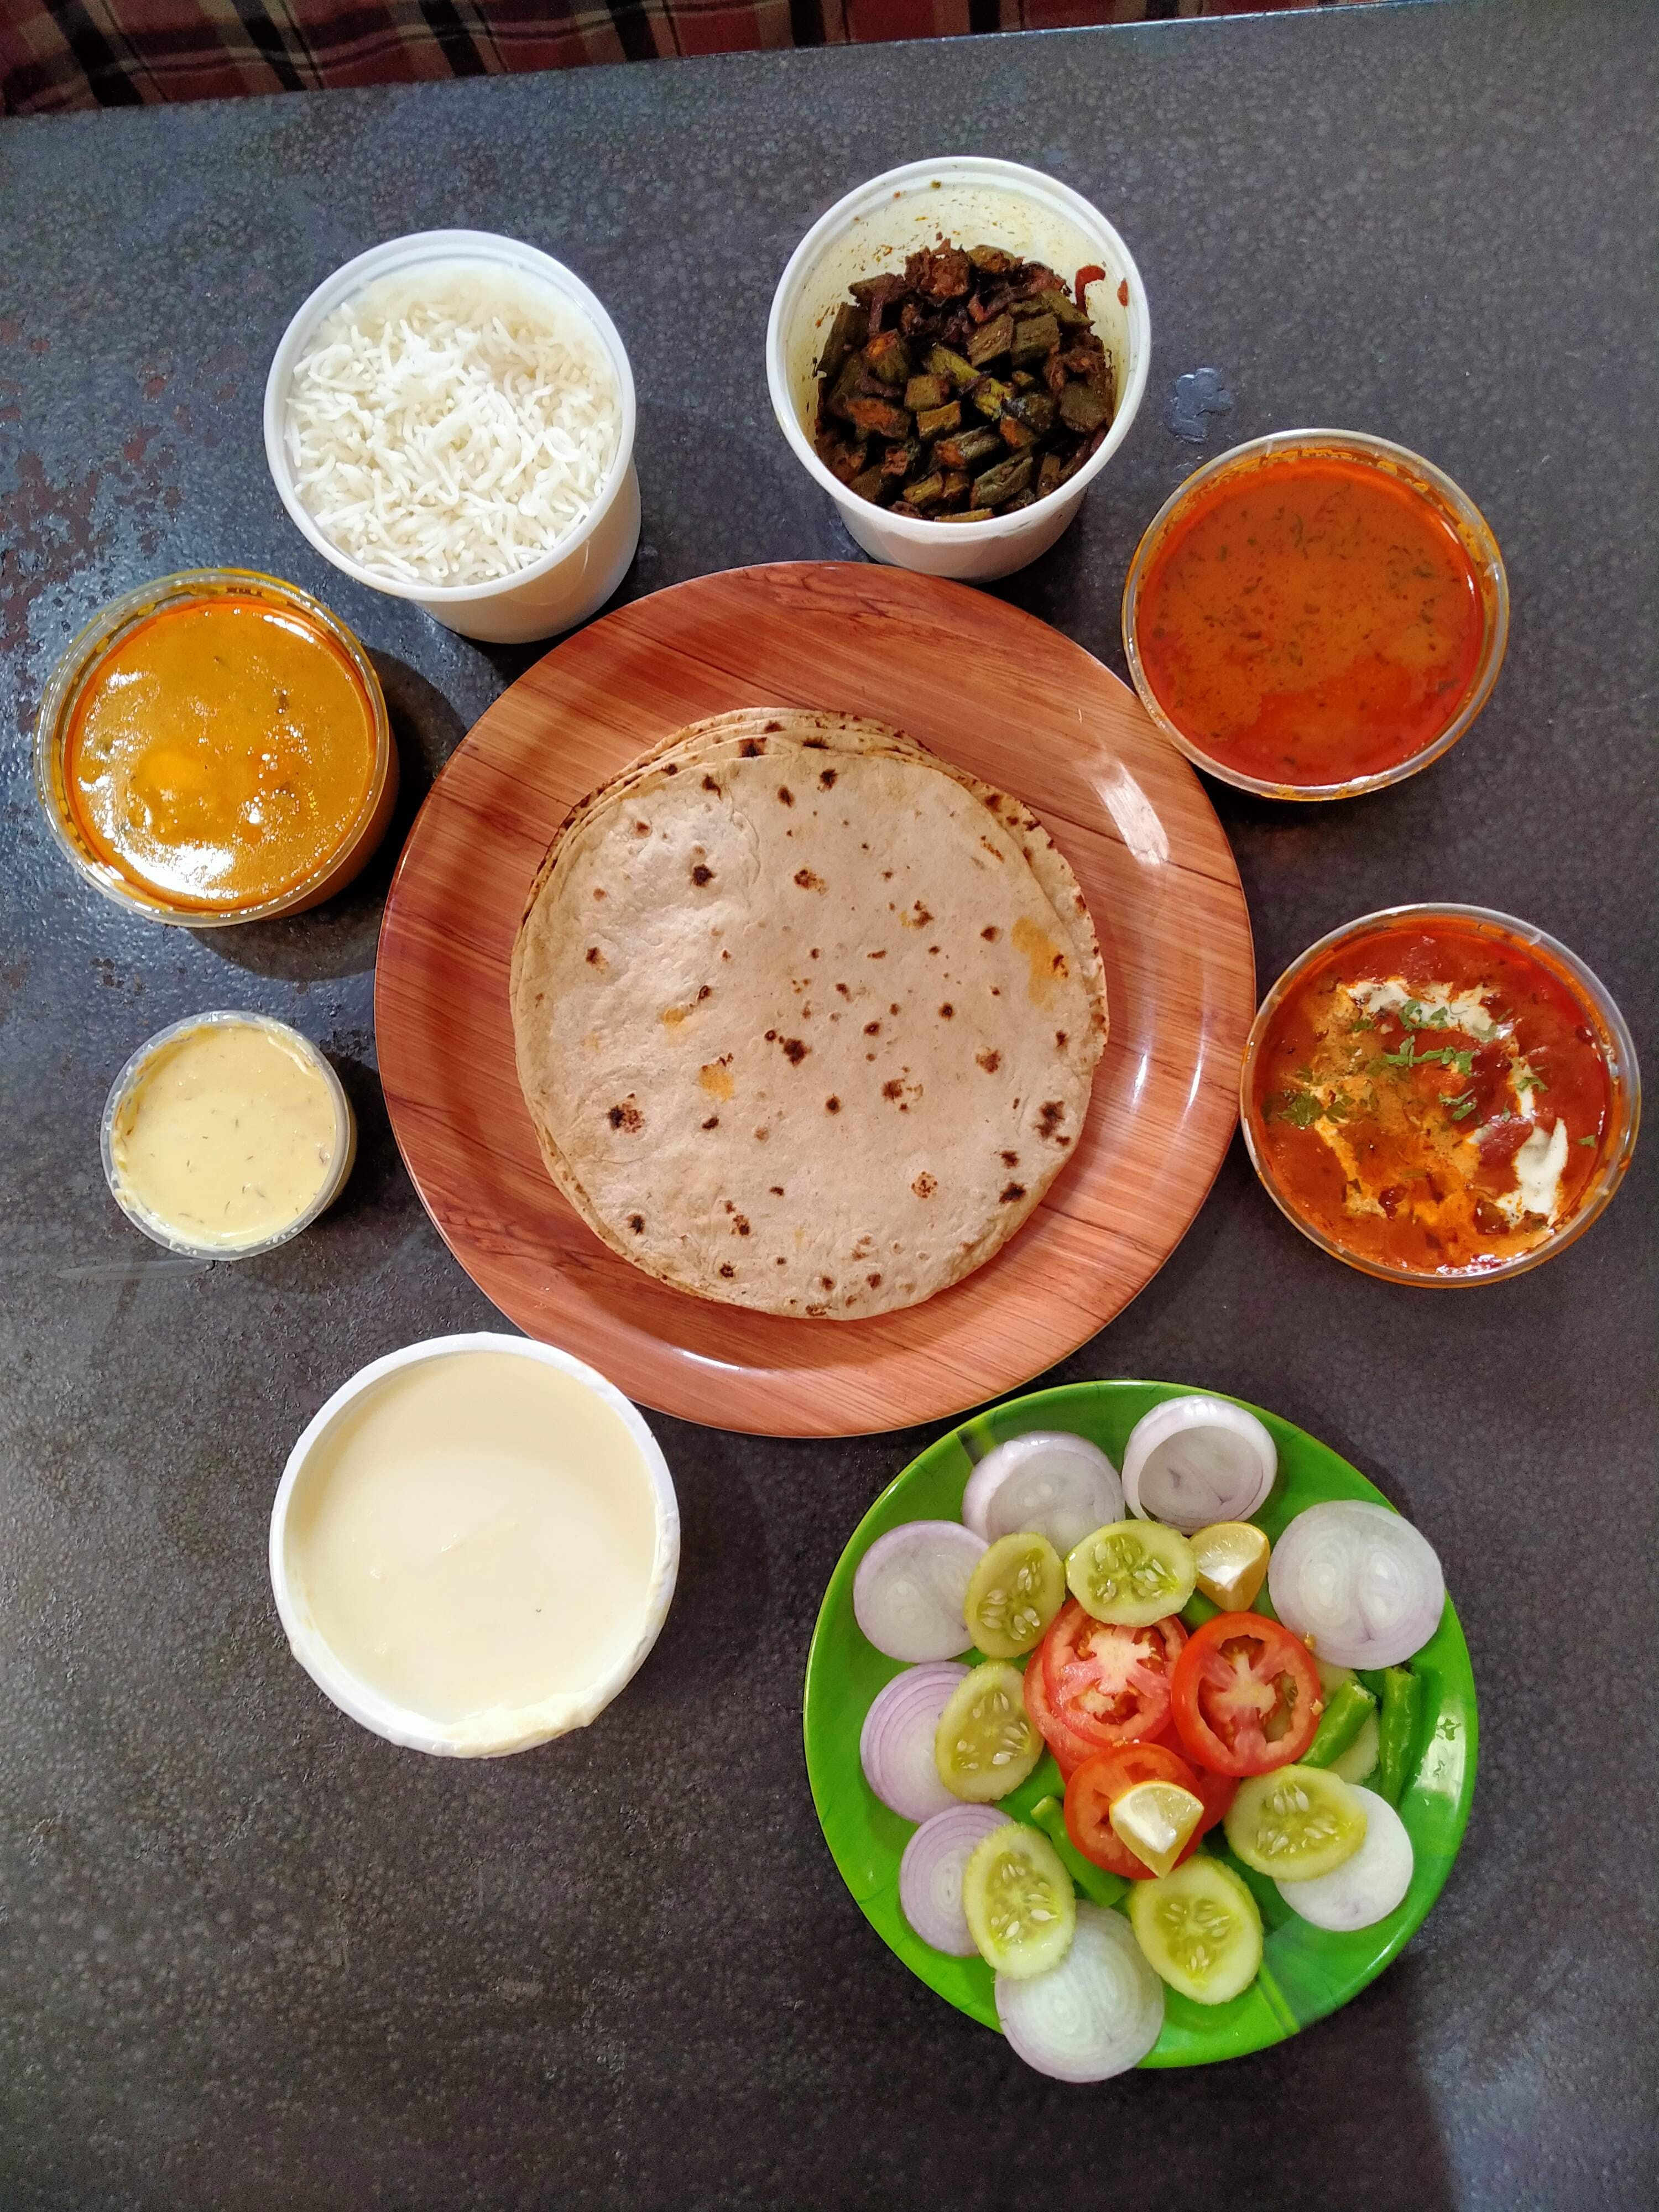 Dish,Food,Cuisine,Ingredient,Meal,Raita,Produce,Indian cuisine,Chutney,Recipe